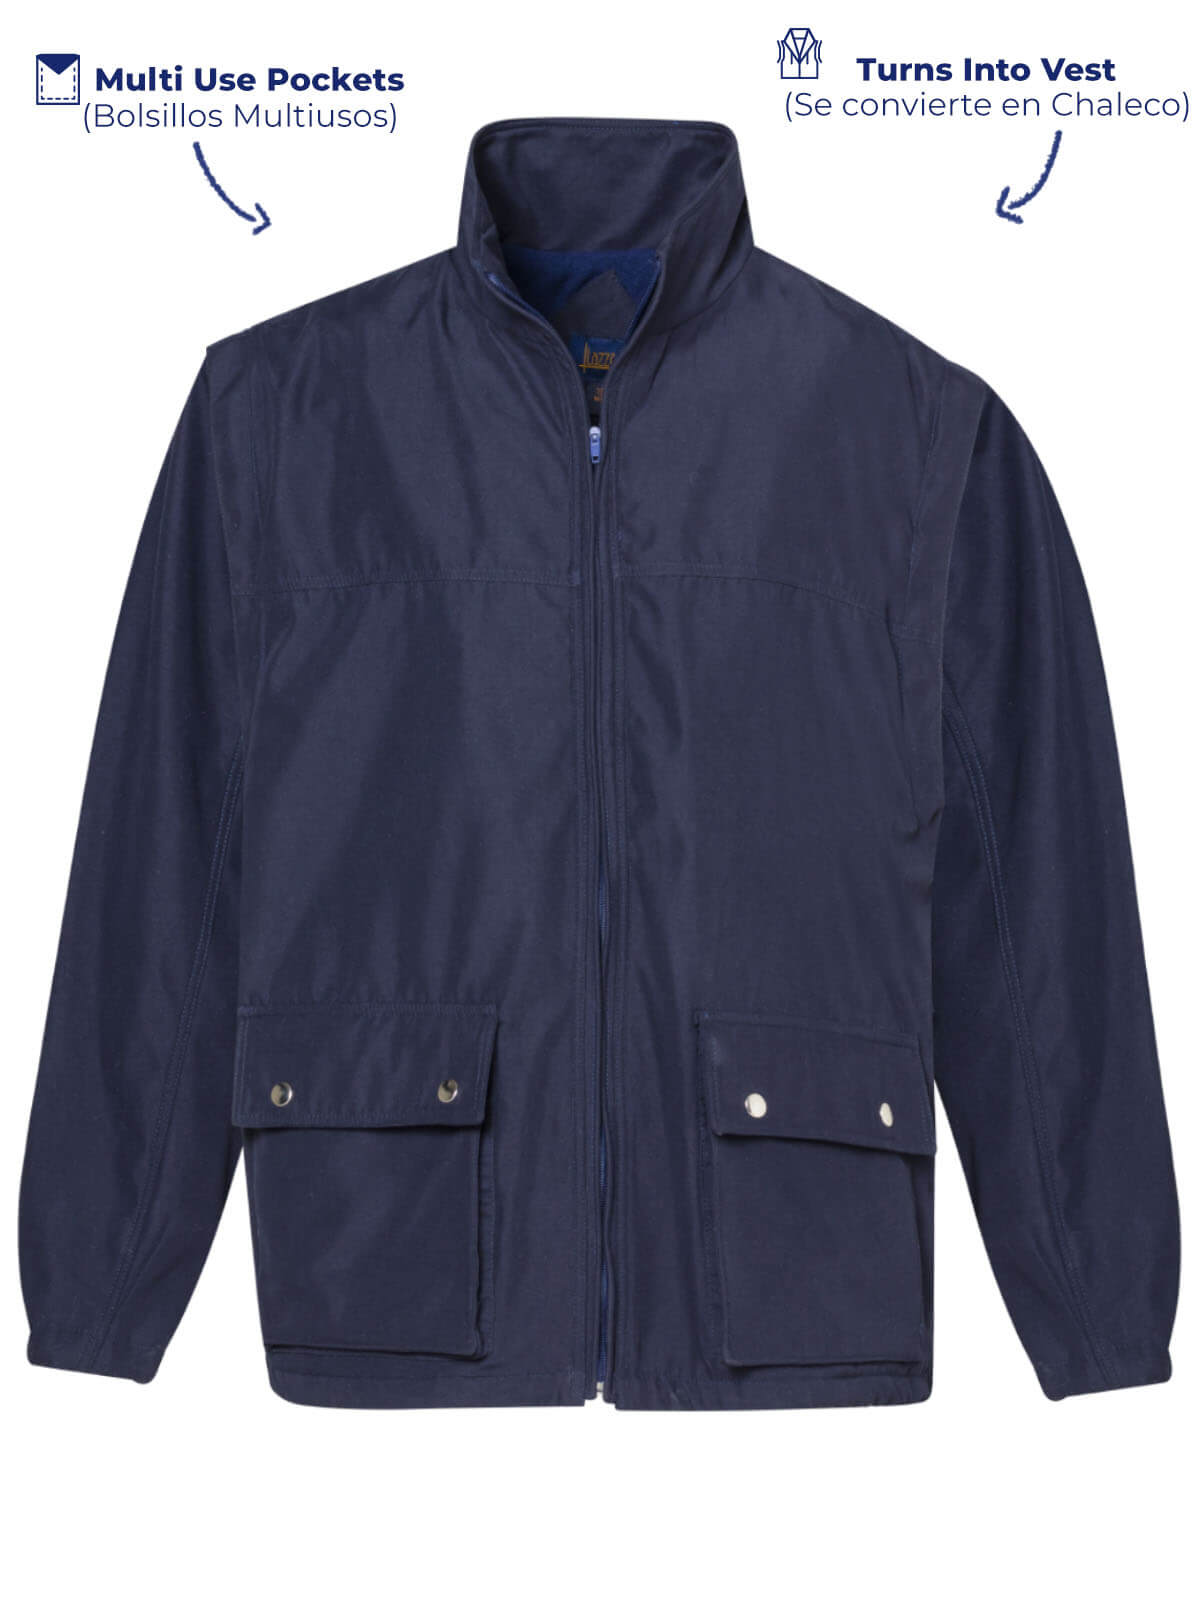 jacket-removable-sleevs-navy